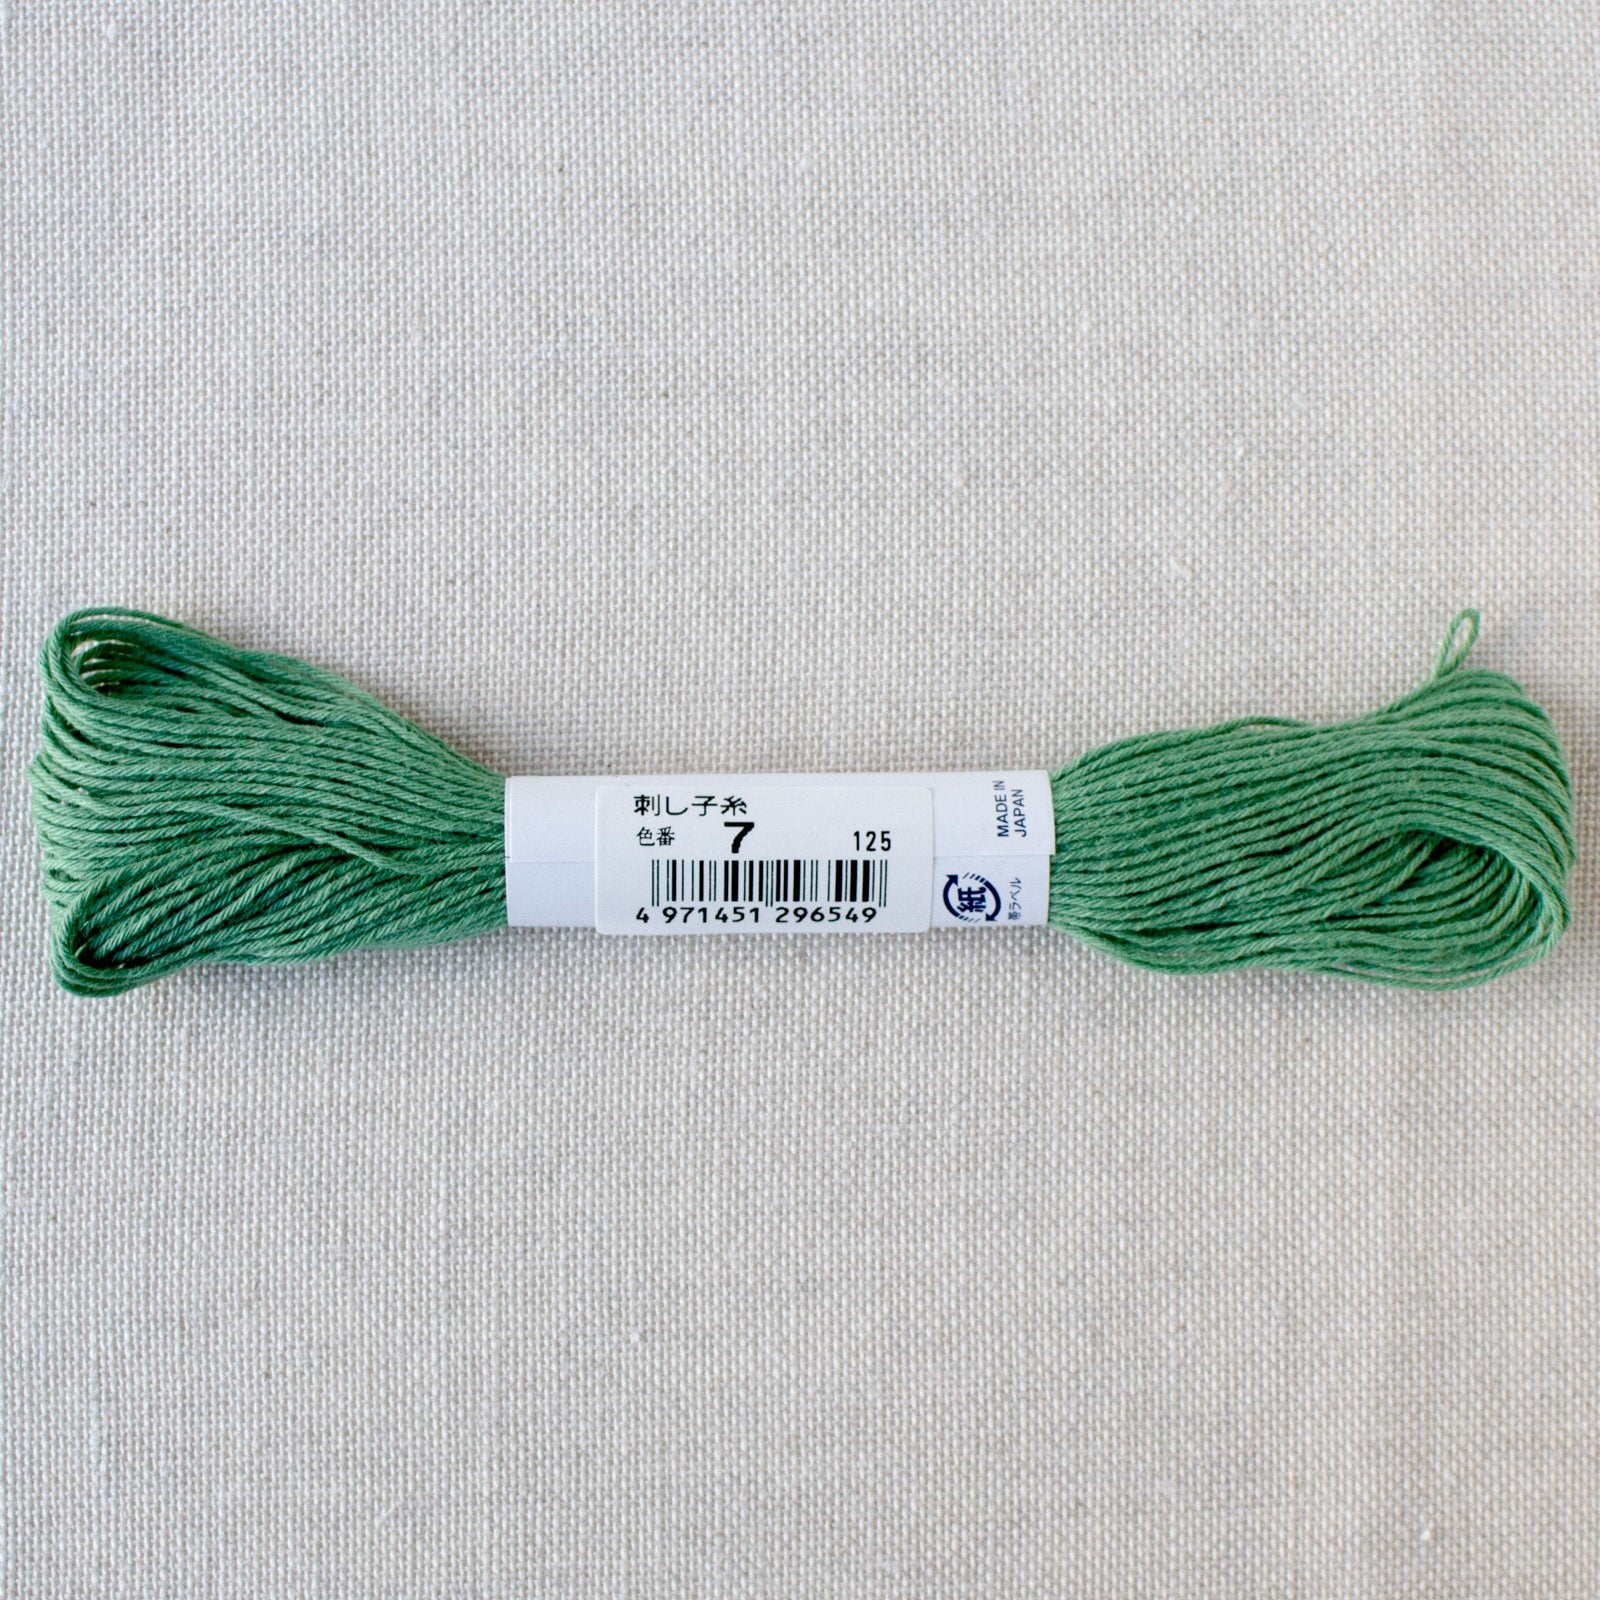 Wool French Floss / Wool Floss / Embroidery Floss / Wool Embroidery Thread  / Cross Stitch Thread / Visible Mending / Sashiko /mending Thread 